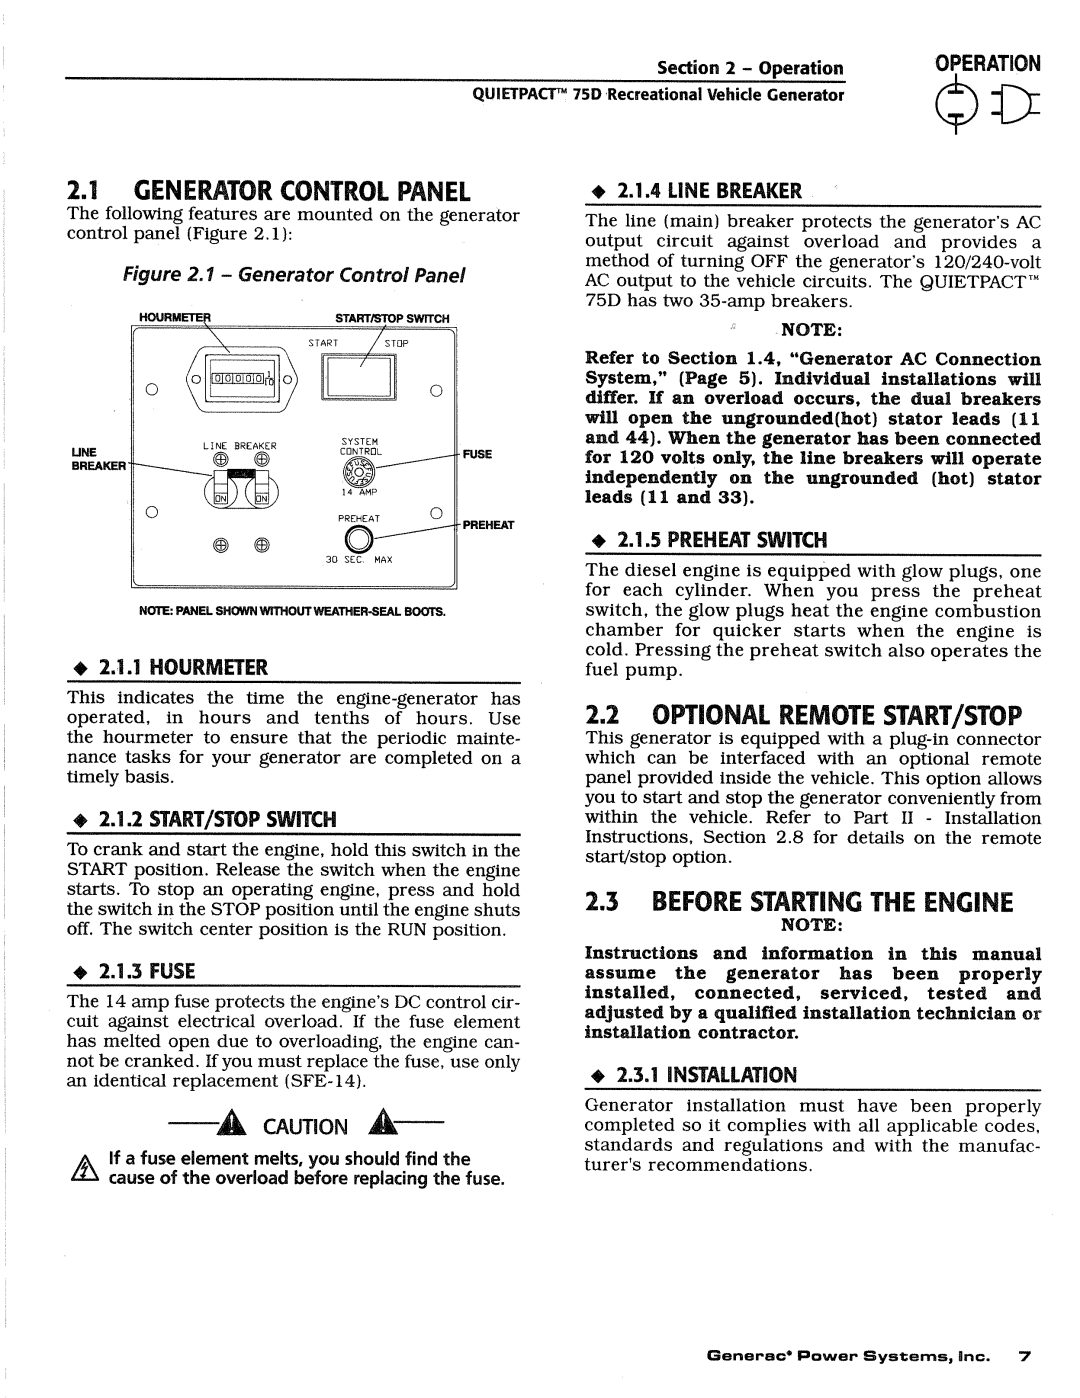 Generac Power Systems 4270-0 manual 